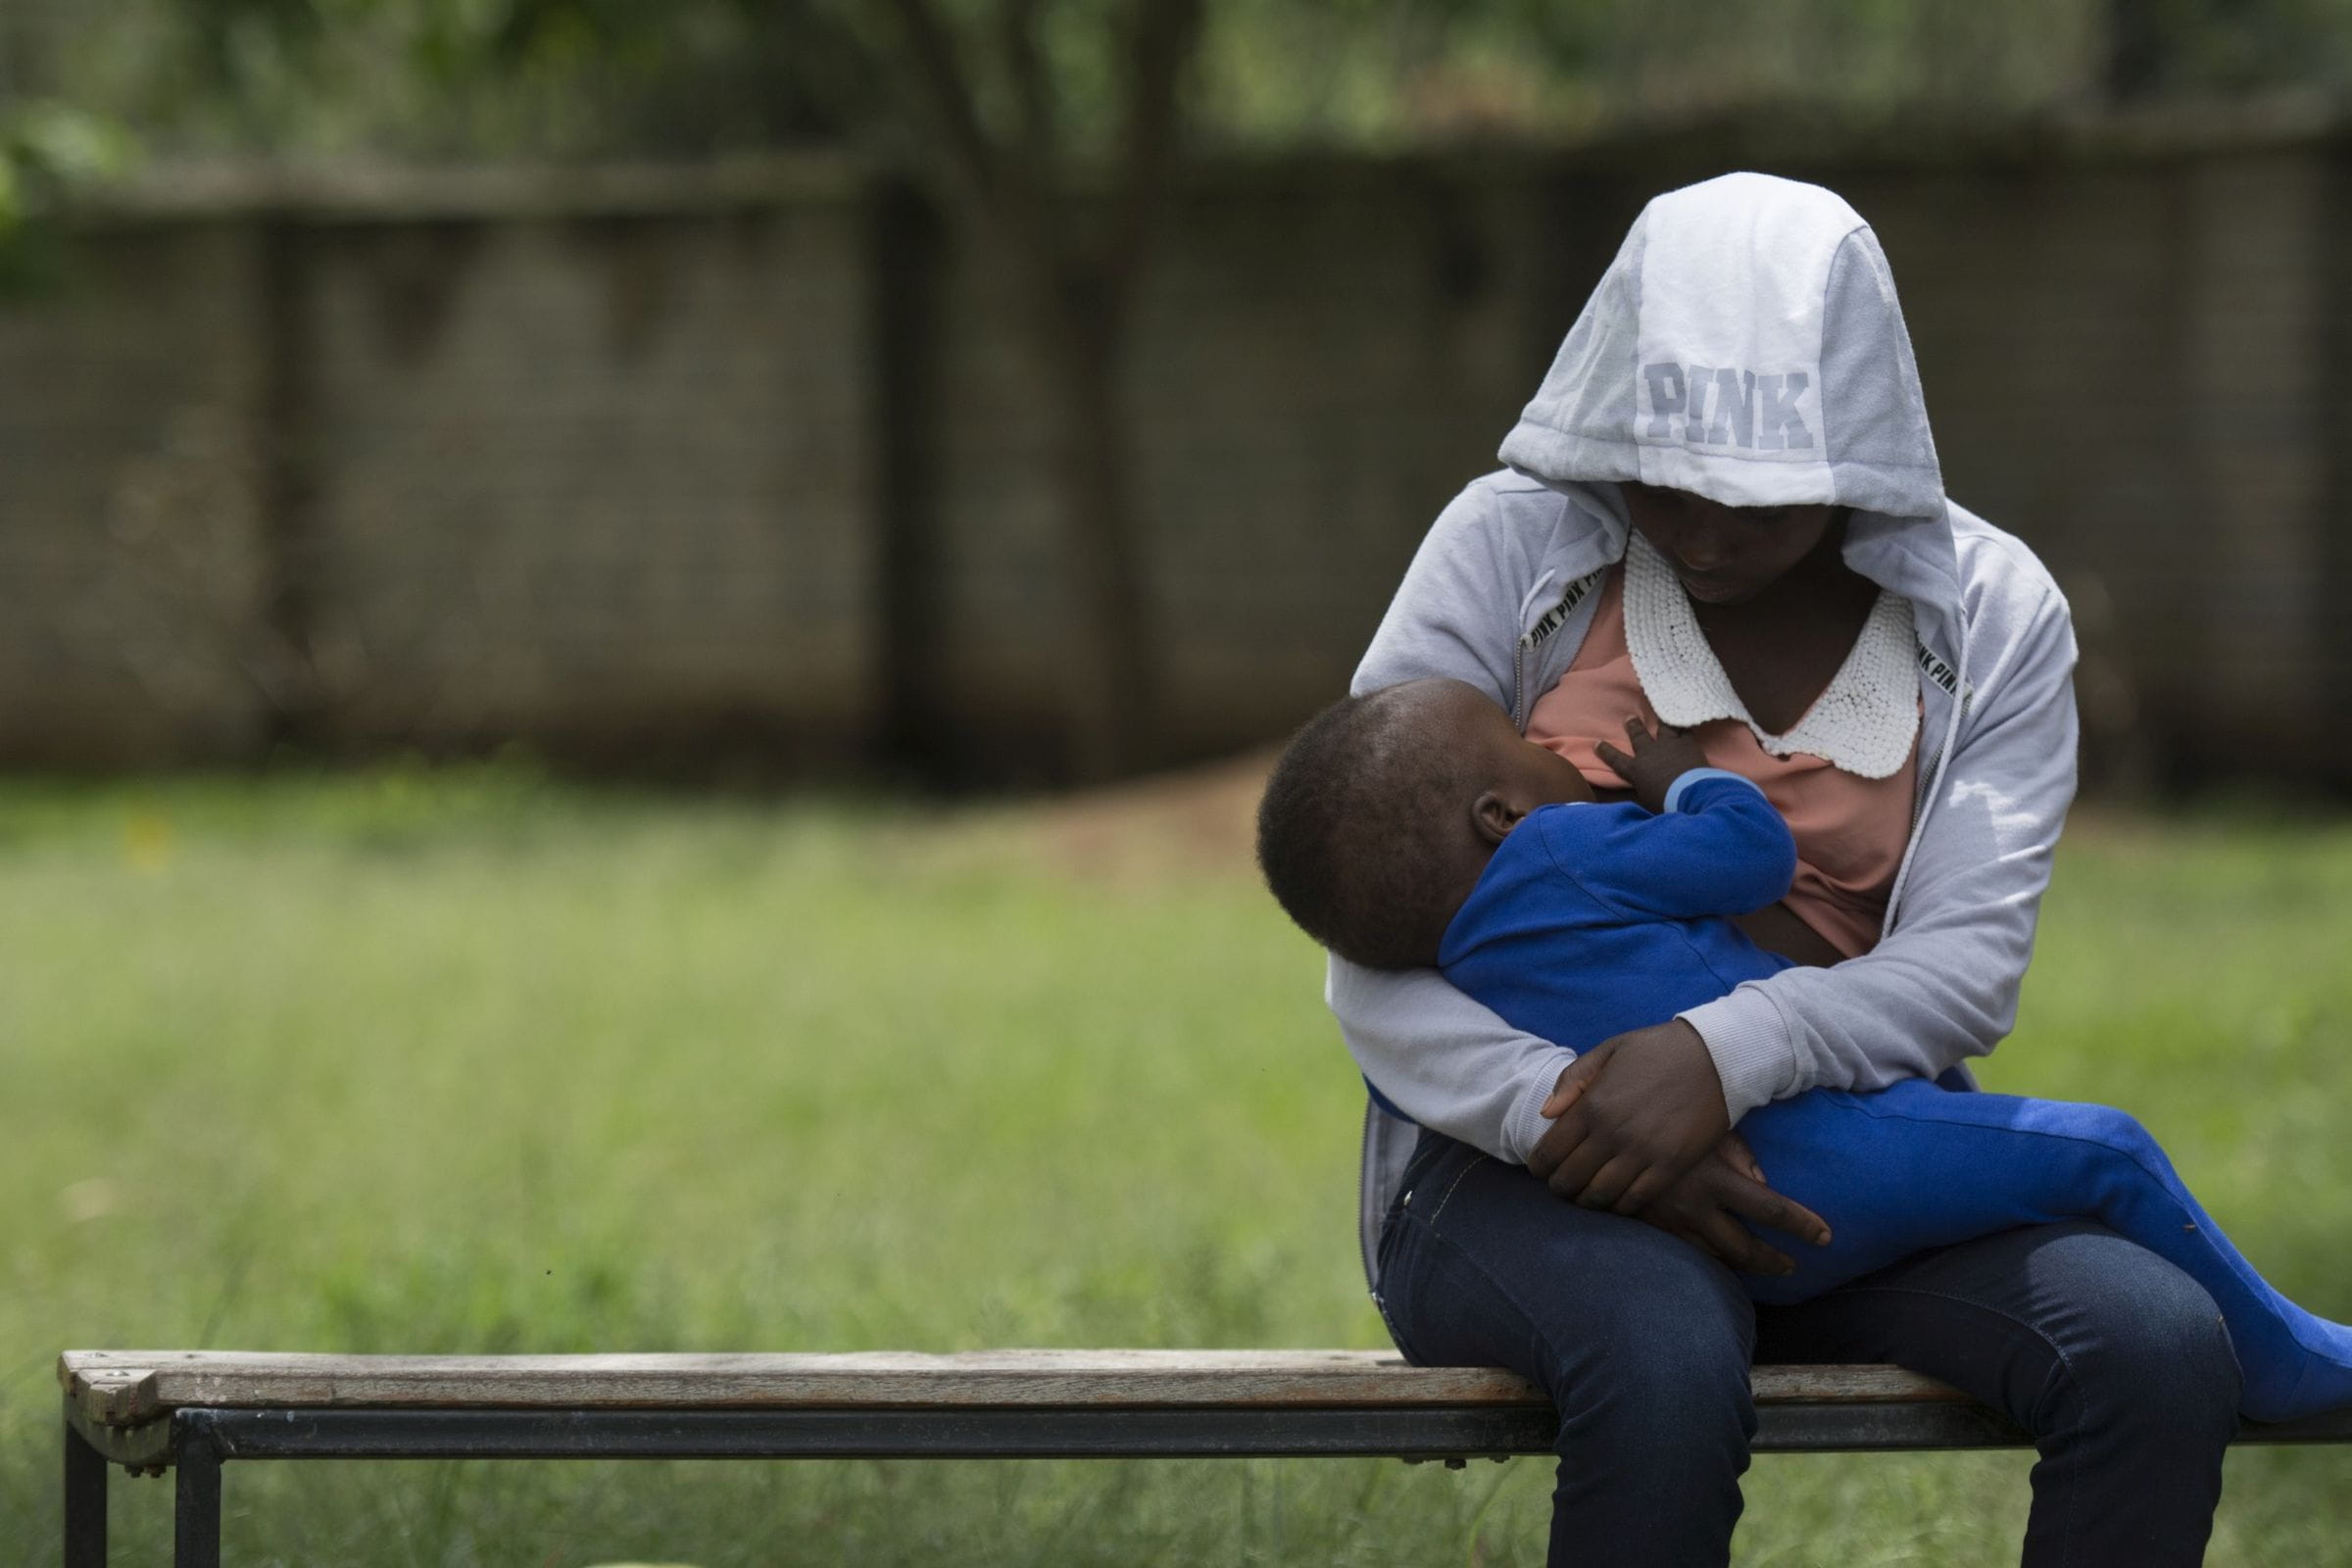 Kenianische Mutter stillt ihr Kind (Quelle: Christian Nusch)